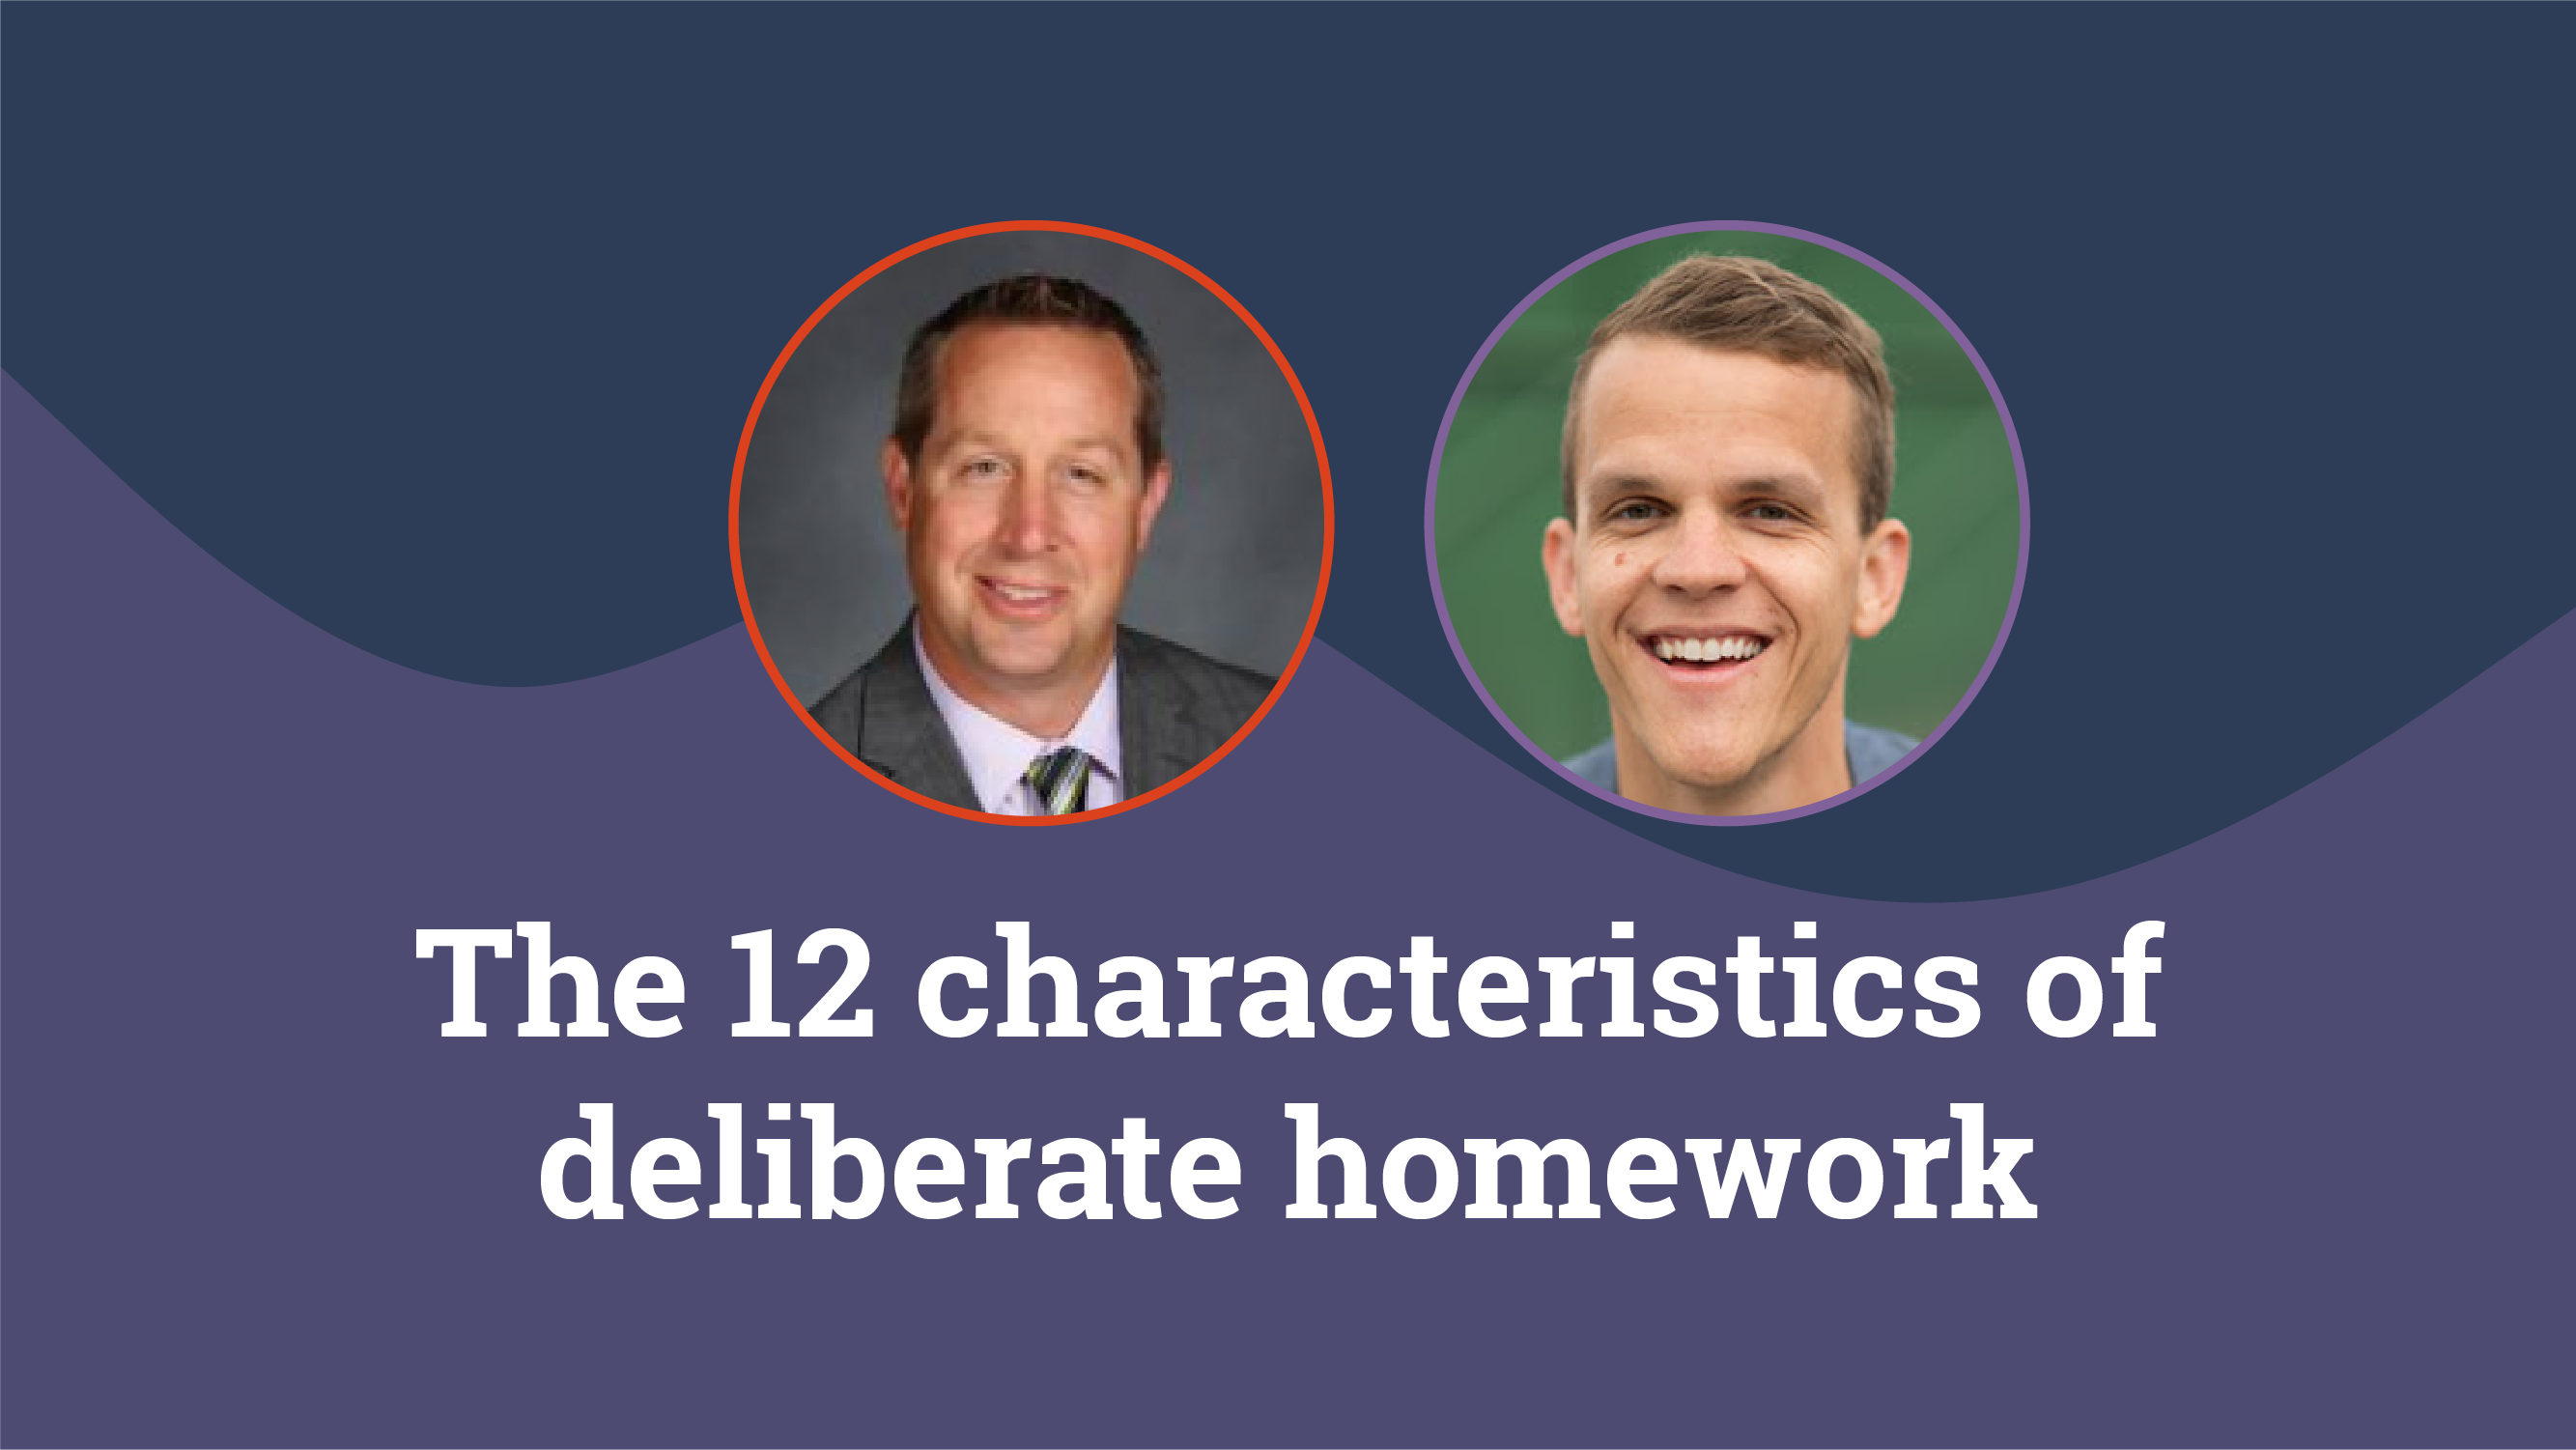 The 12 characteristics of deliberate homework